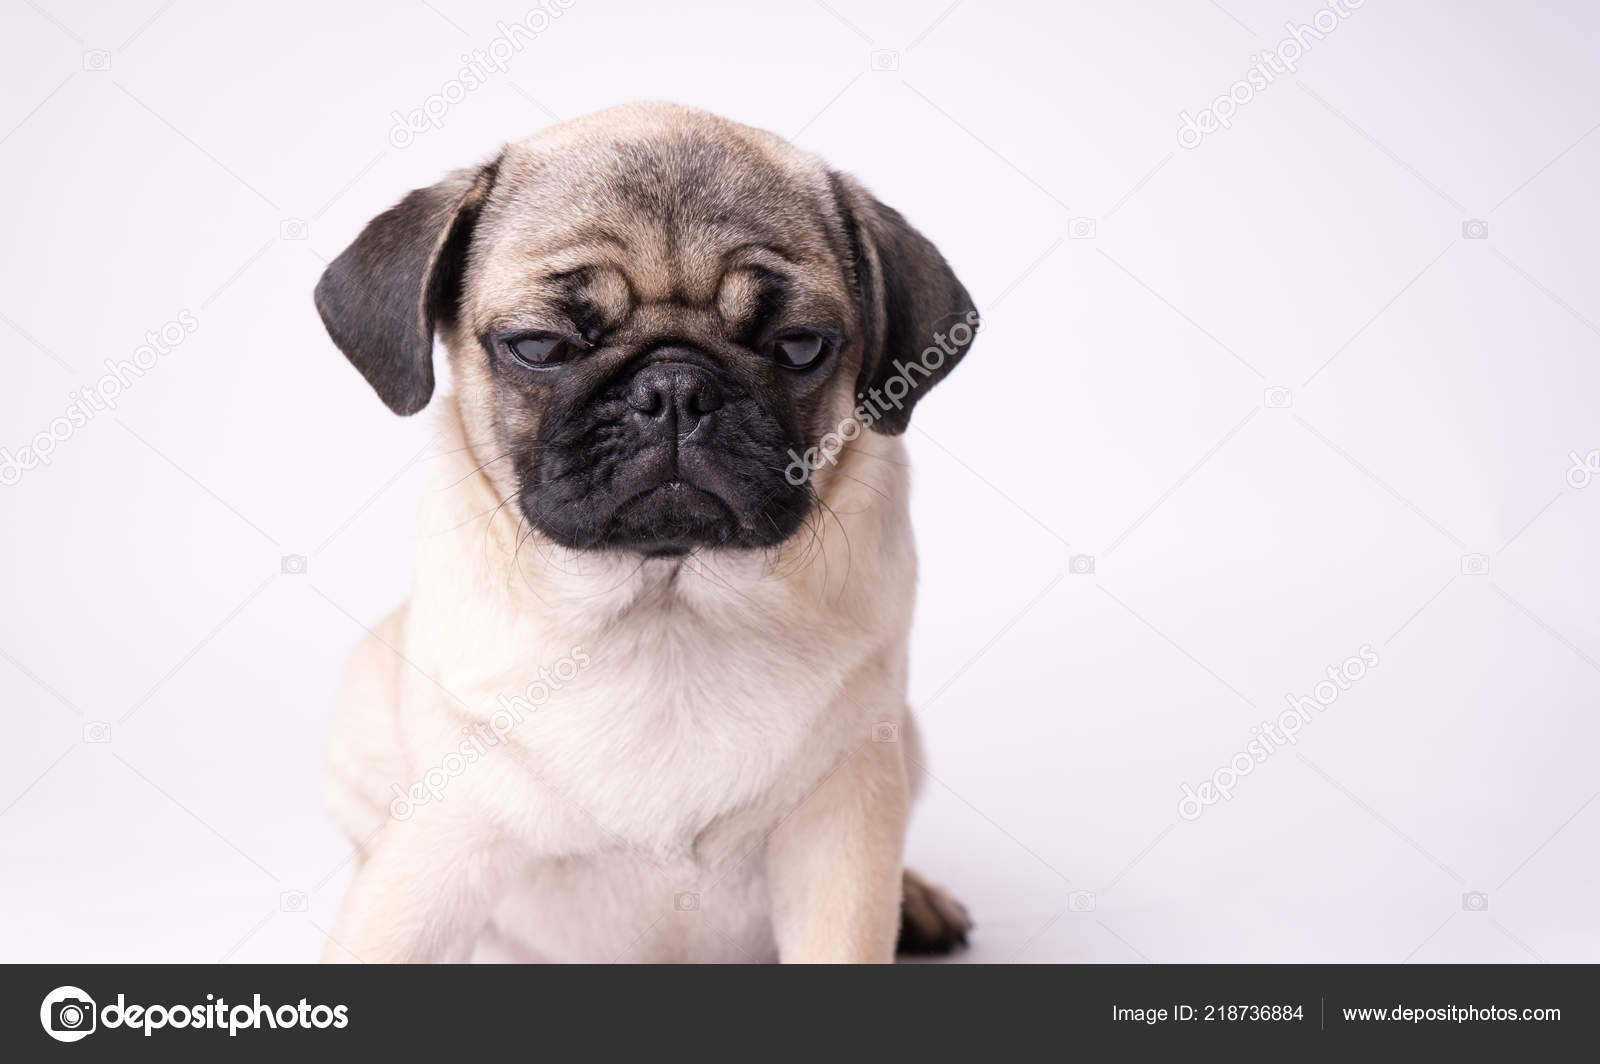 chubby pug puppy